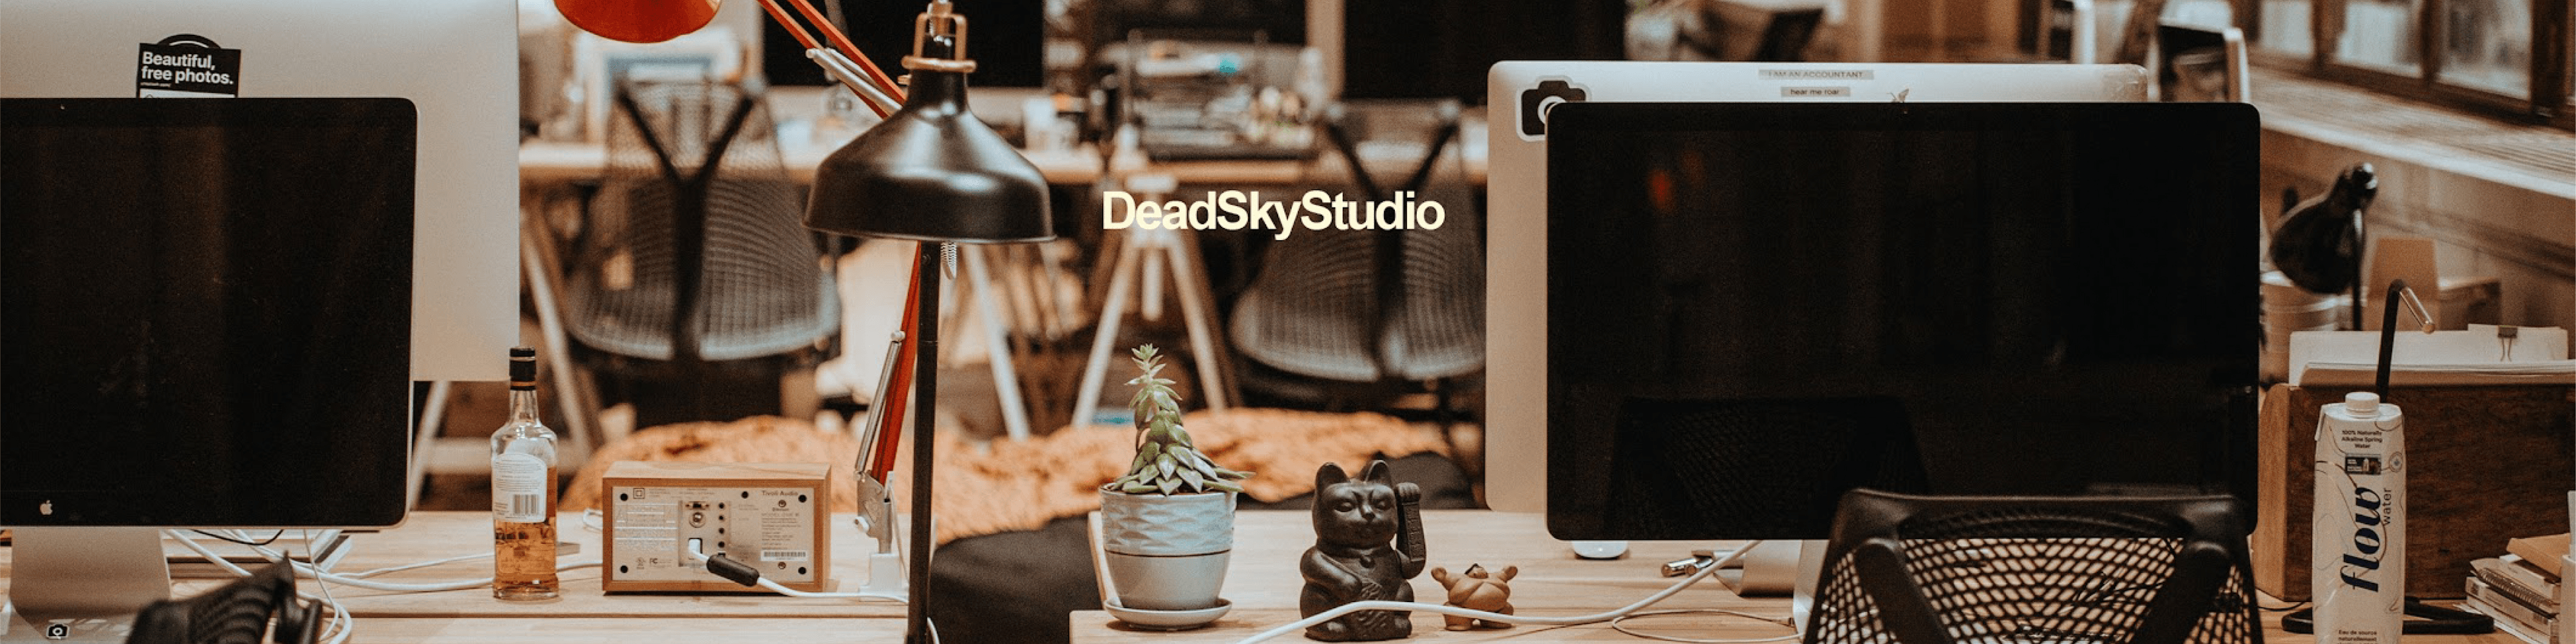 DeadSkyStudio bannière